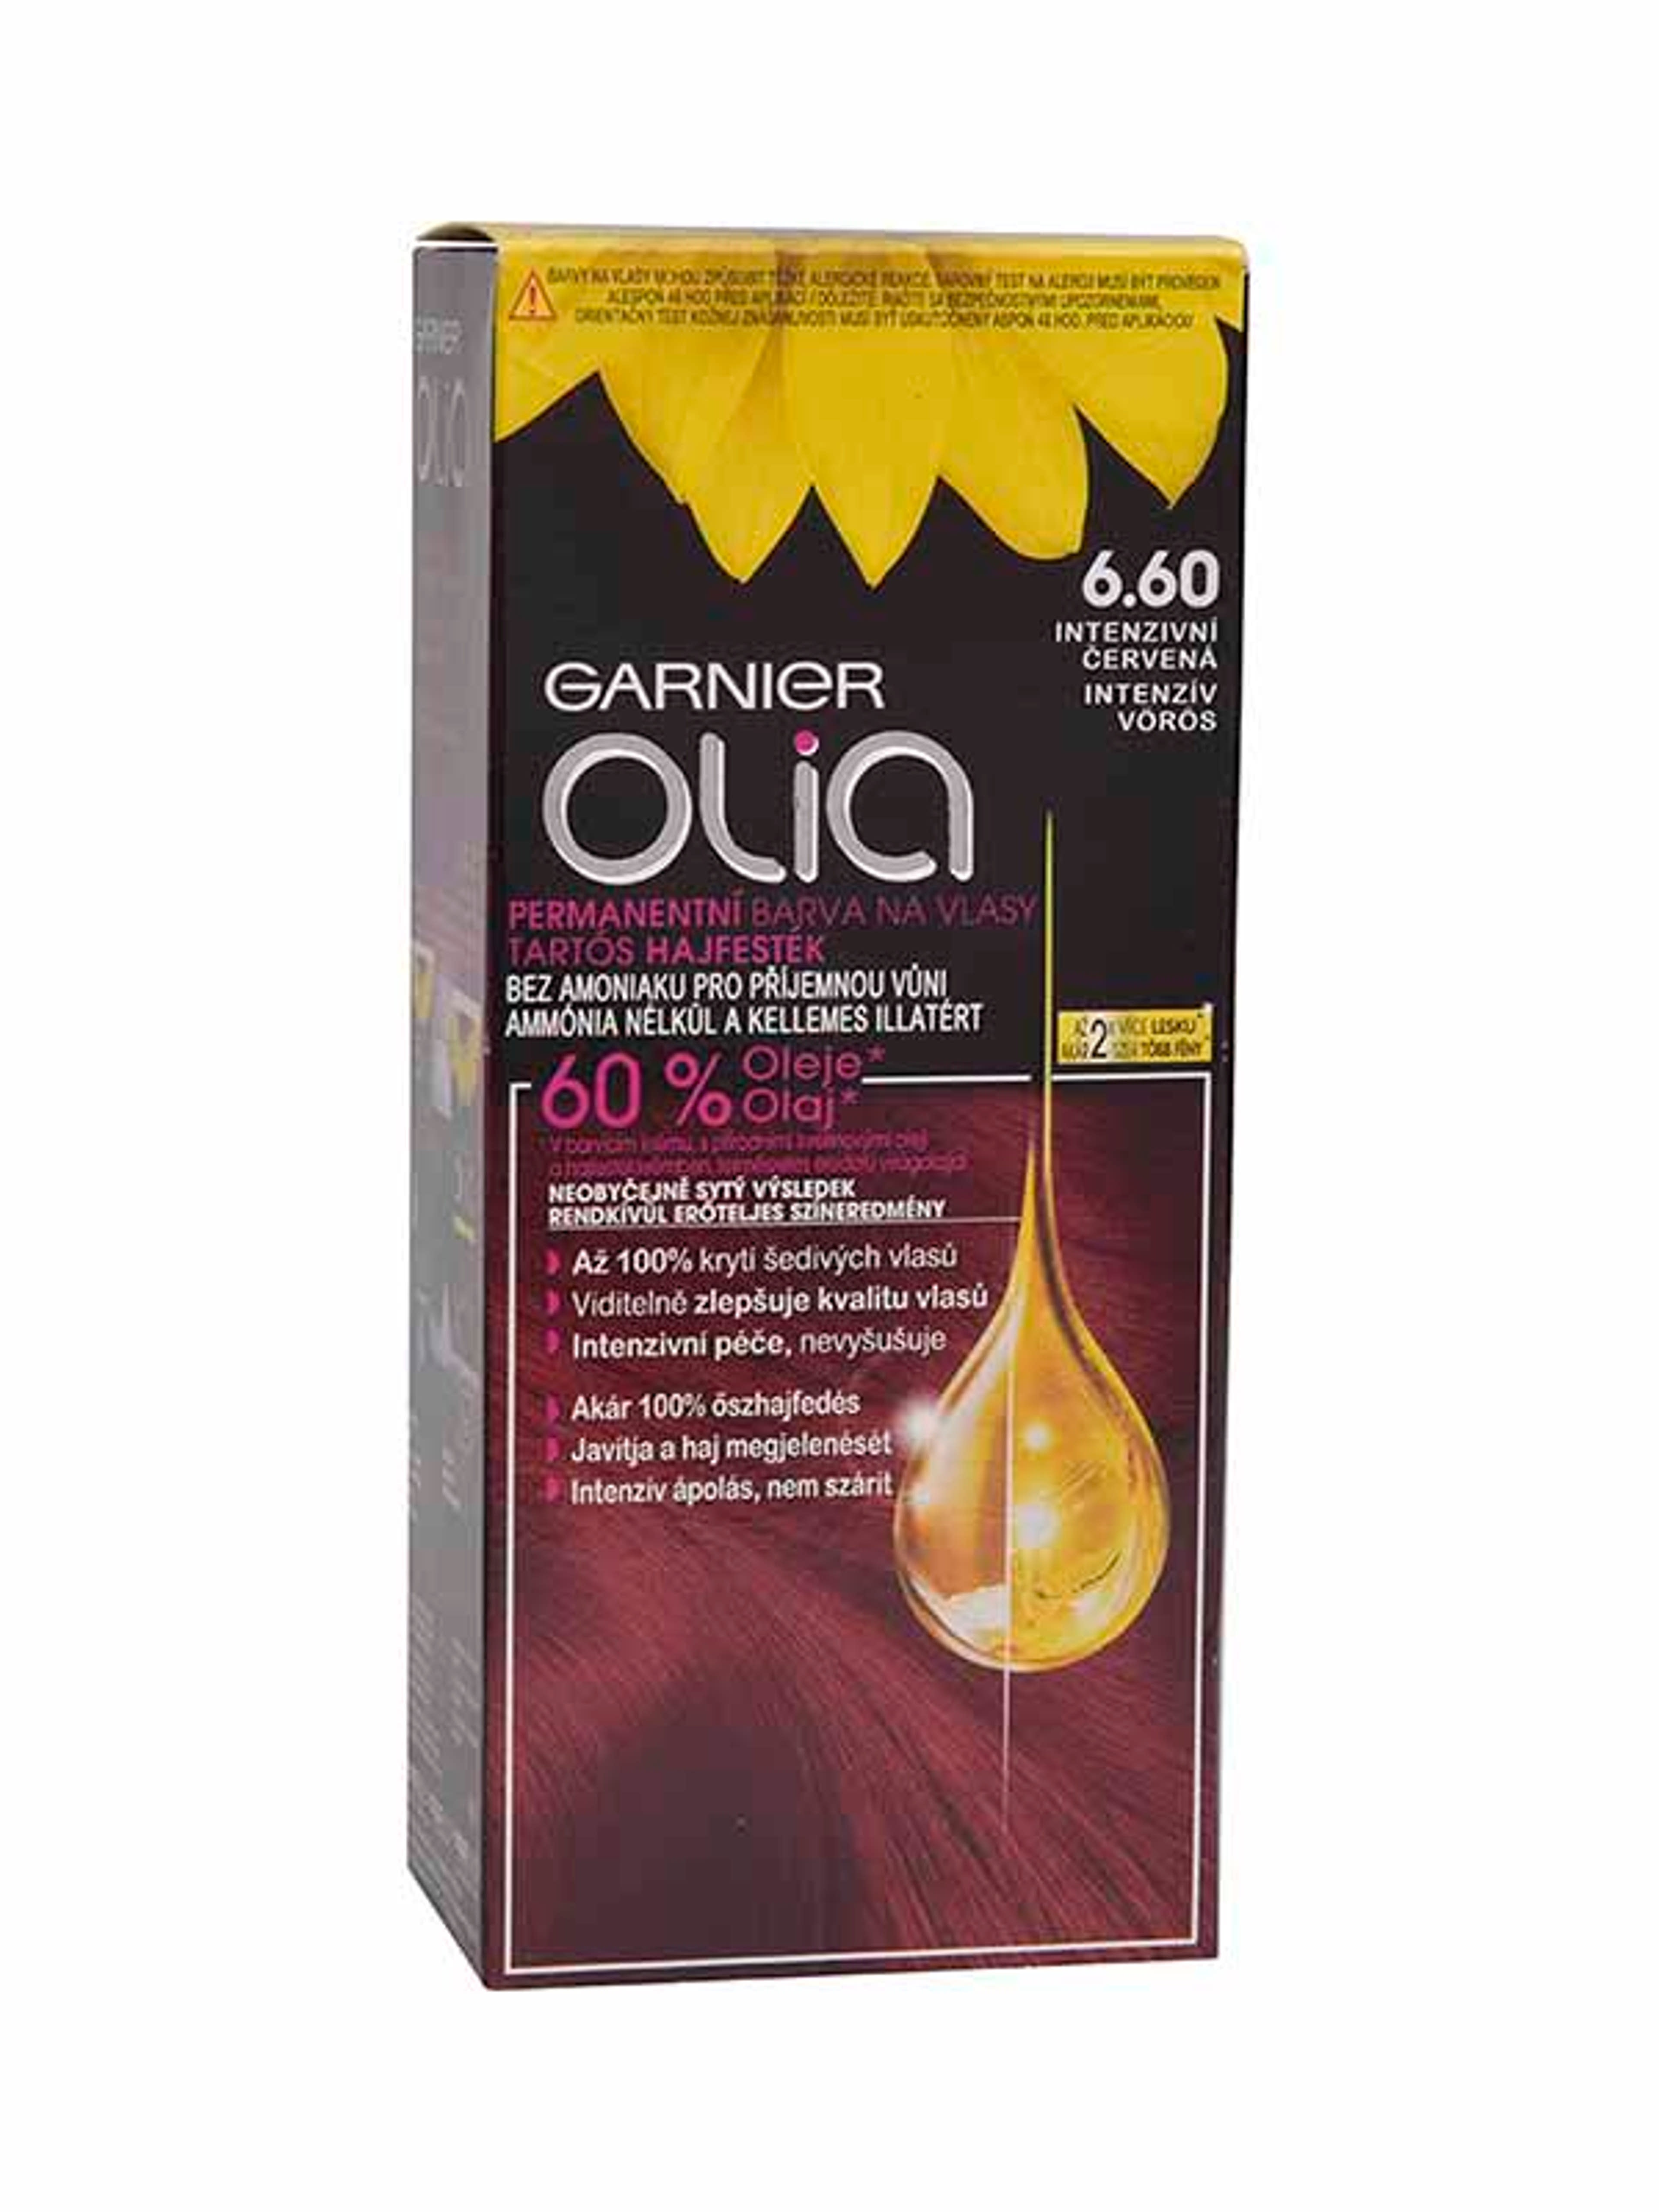 Garnier Olia tartós hajfesték 6.60 Intenzív vörös - 1 db